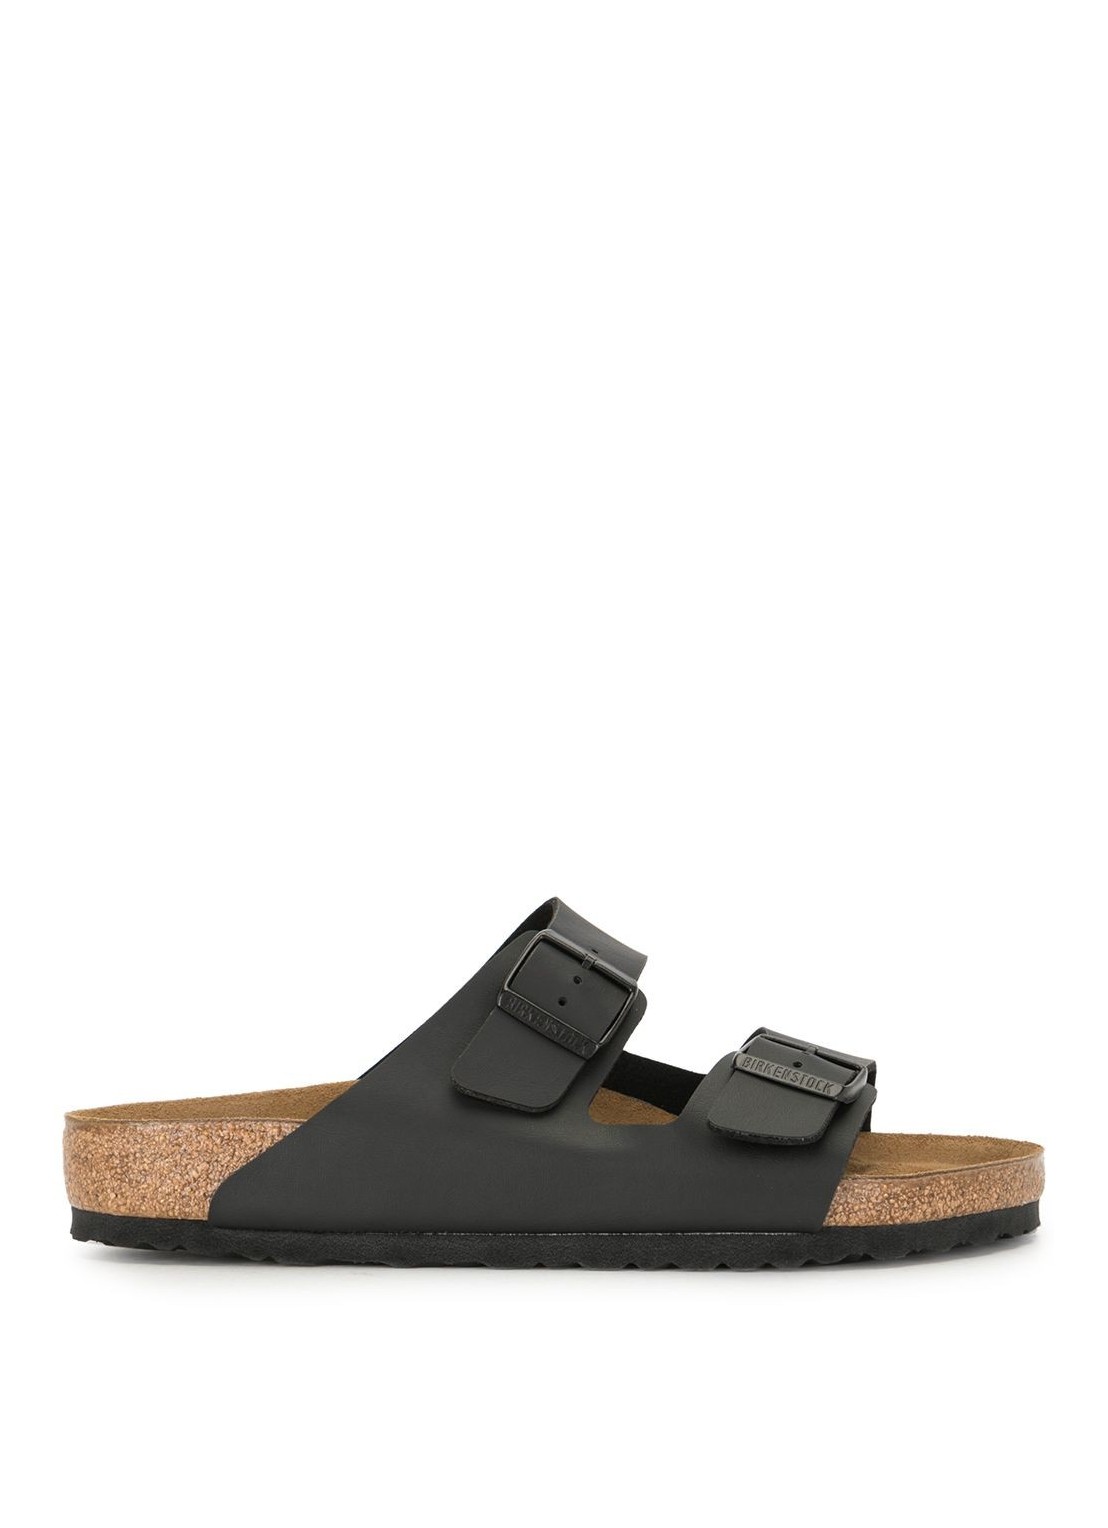 Sandalia birkenstock sandal man arizona bf 51791 black talla 45
 